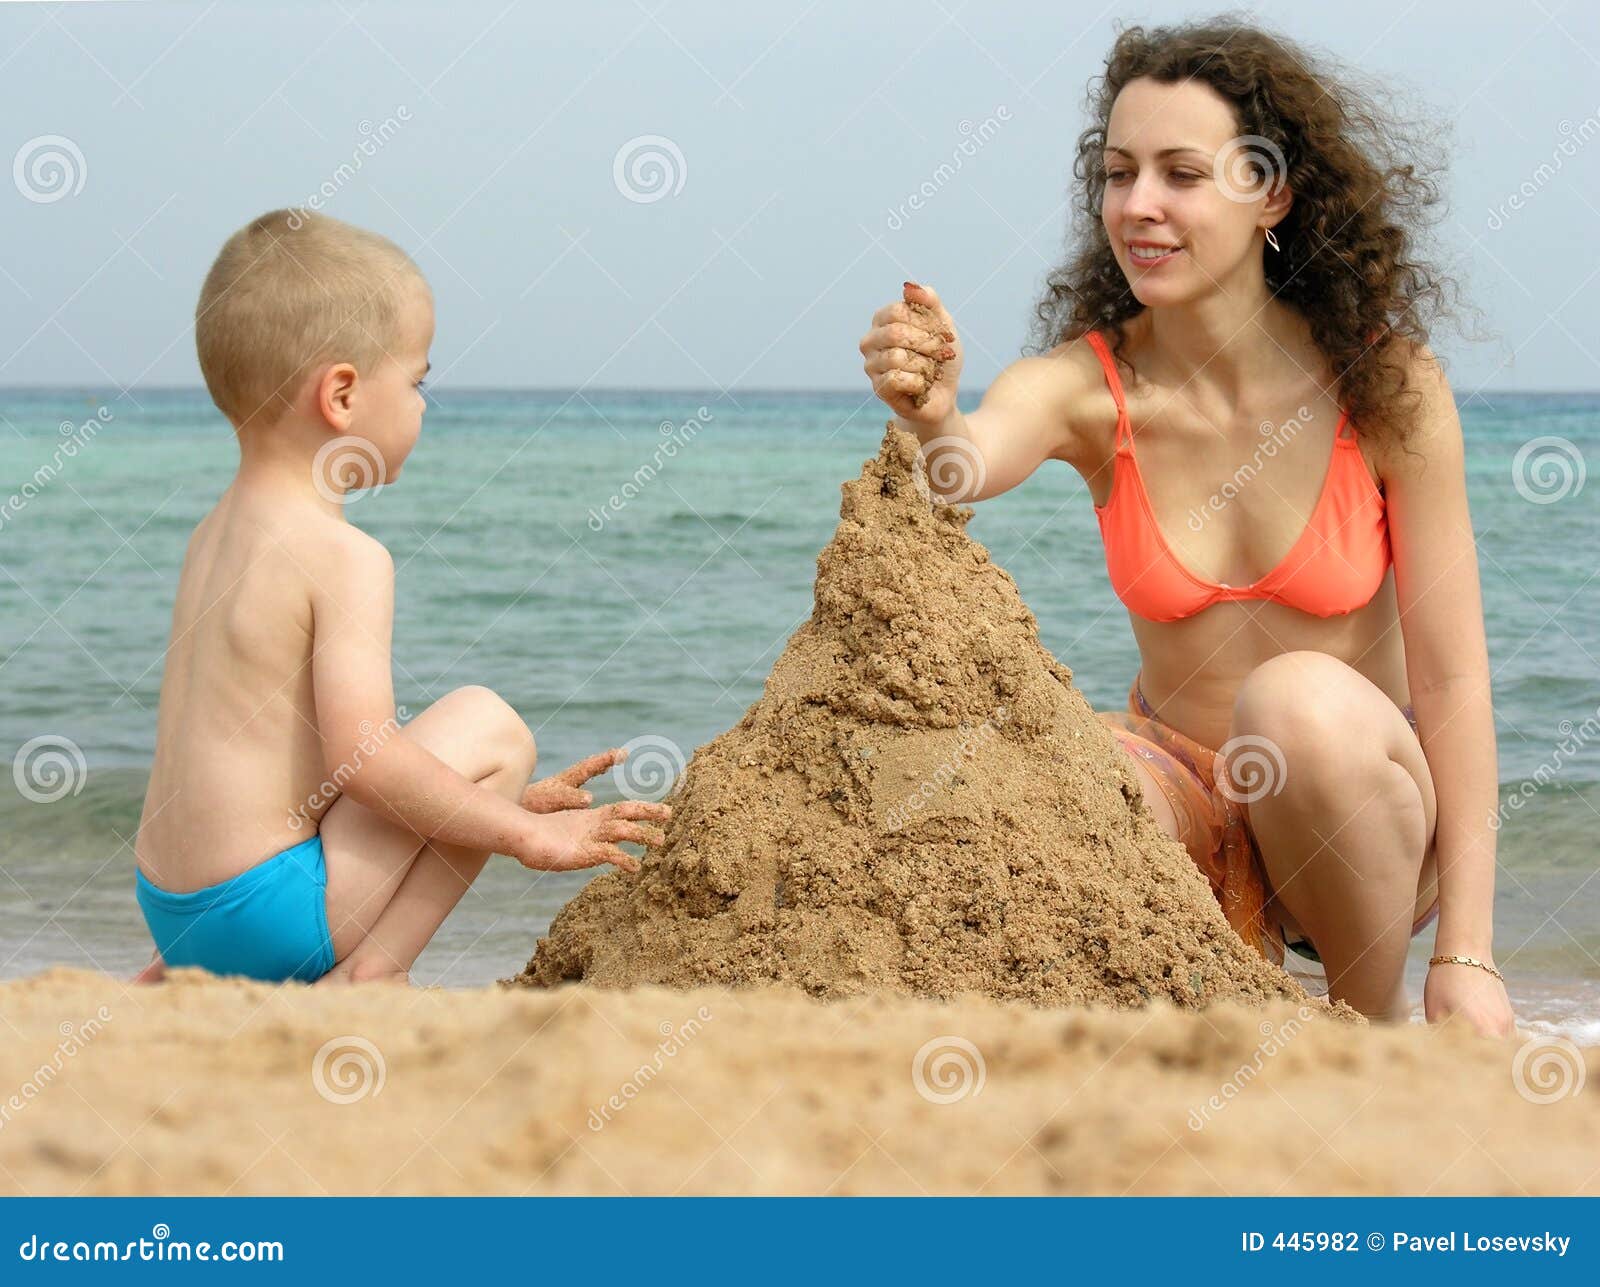 http://thumbs.dreamstime.com/z/mother-son-play-beach-445982.jpg